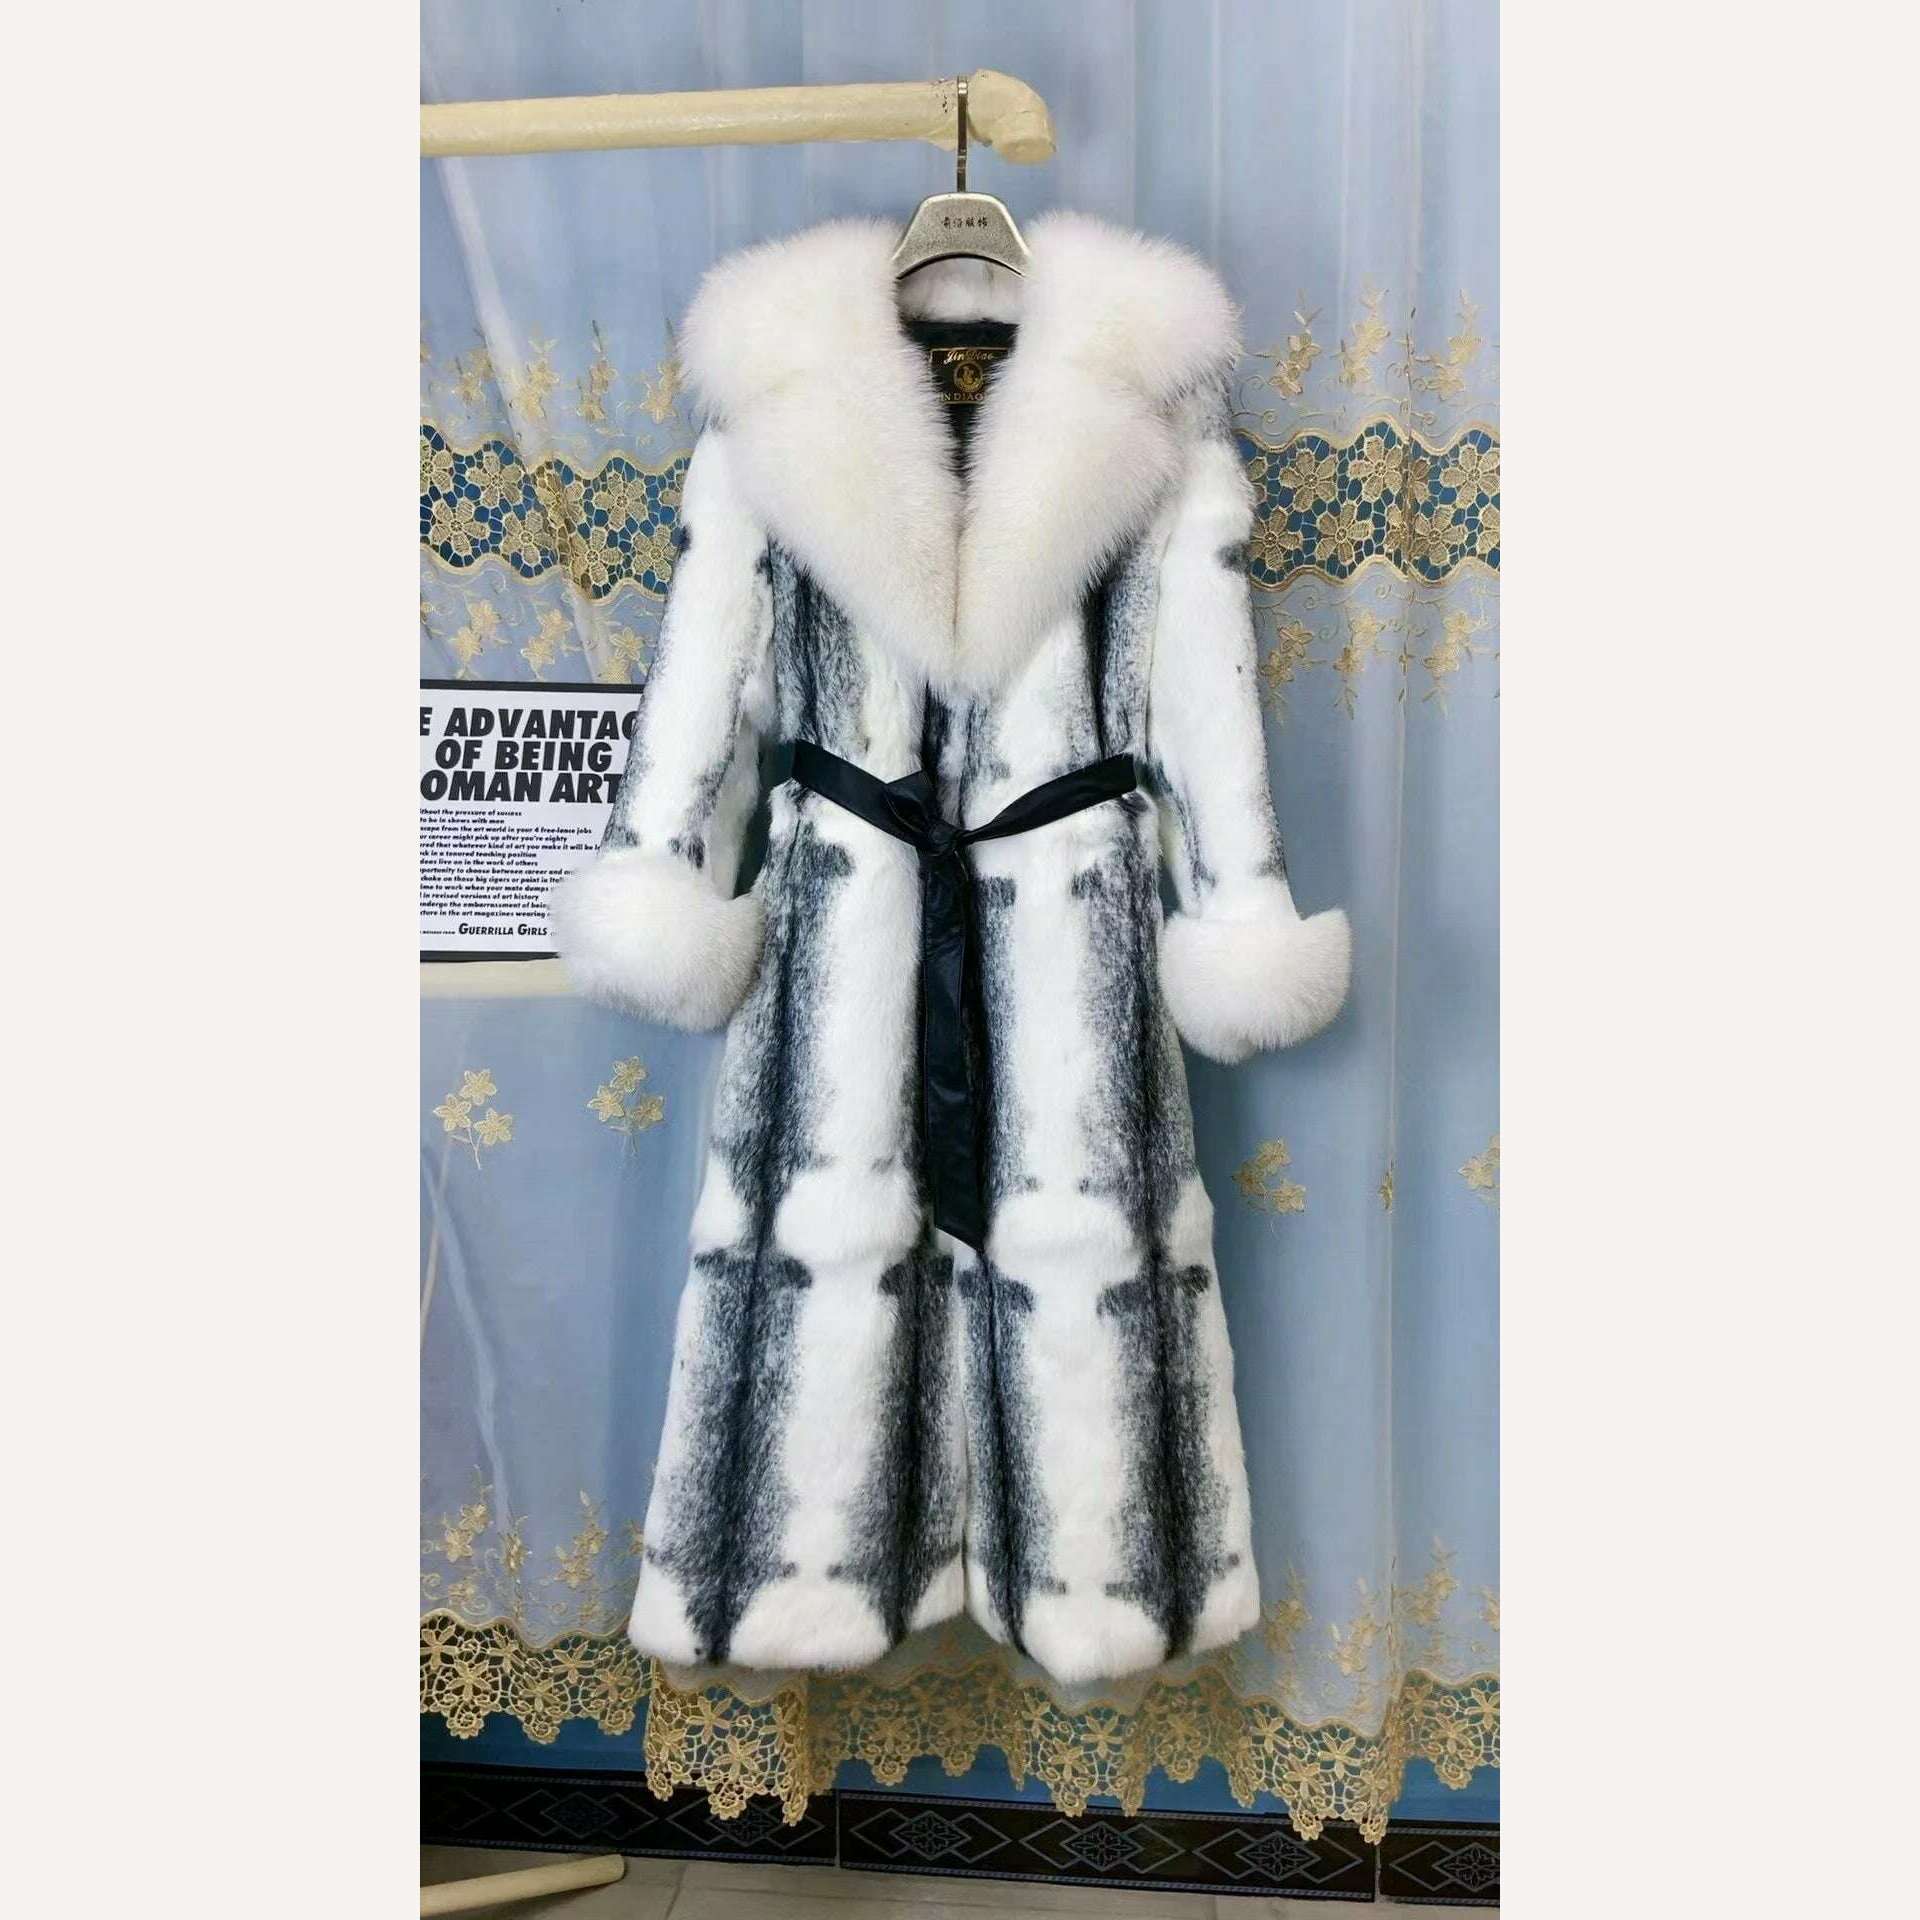 KIMLUD, Women Winter Fashion Real Fur Coat X-long Natural Rabbit Fur Jacket With Real Fox Fur Collar Cuffs Winter Jacket Ladies Fur Coat, 4 / S bust 90cm, KIMLUD Women's Clothes